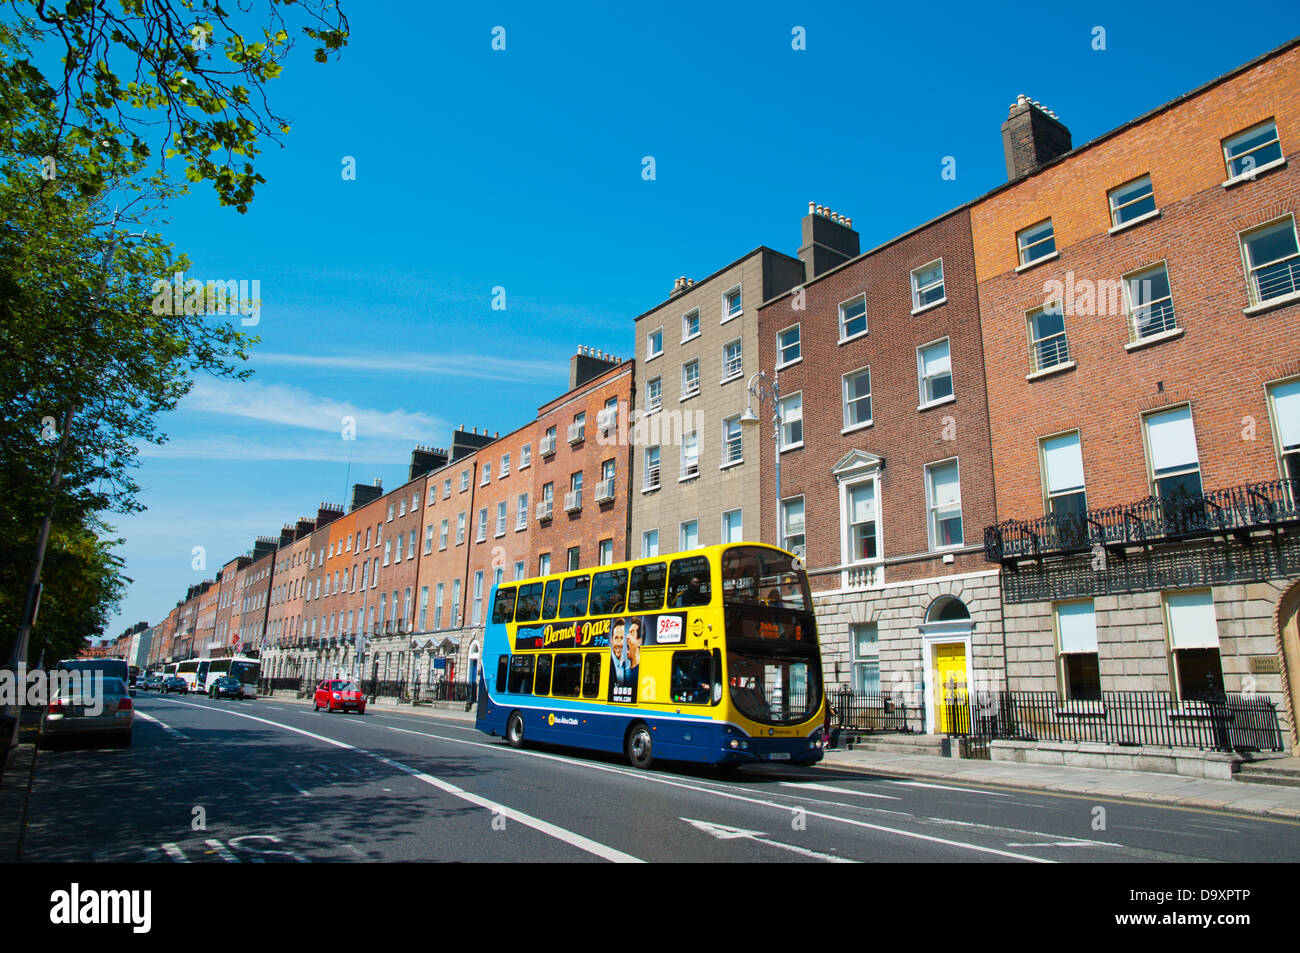 Merrion Square central Dublin Ireland Europe Stock Photo